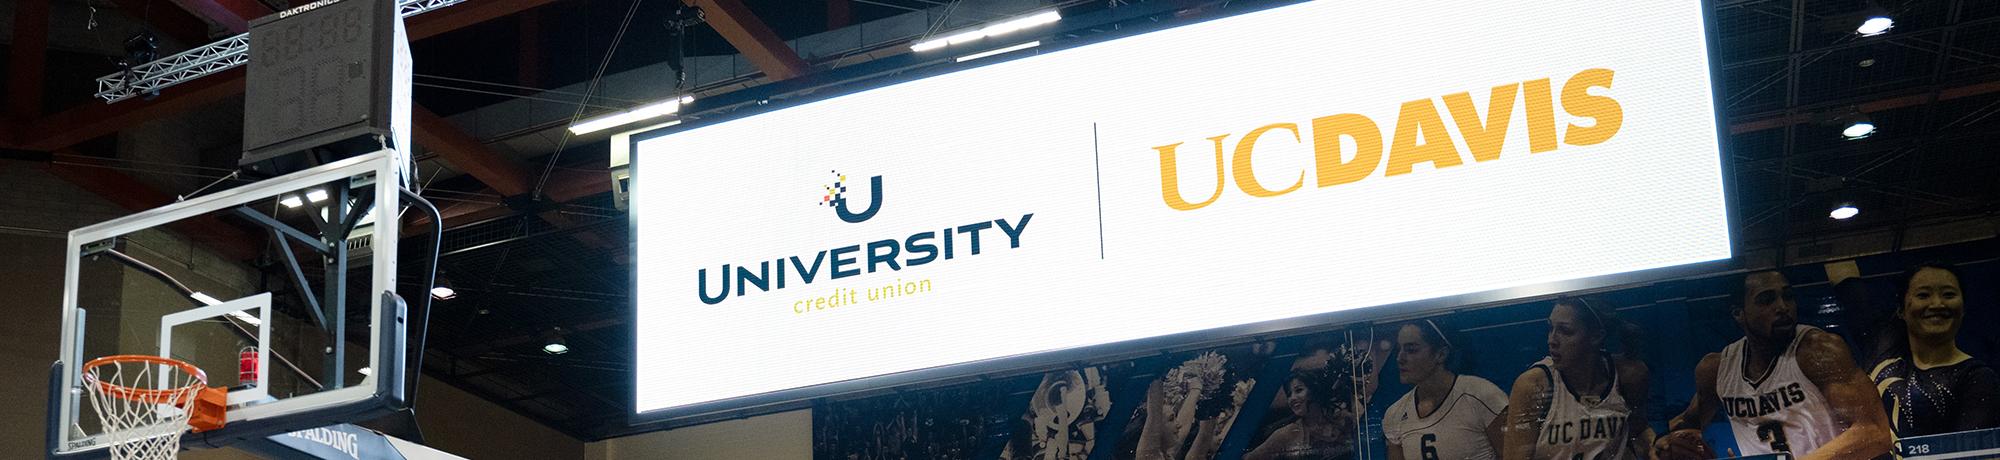 Photo of basketball scoreboard with UCU logo.